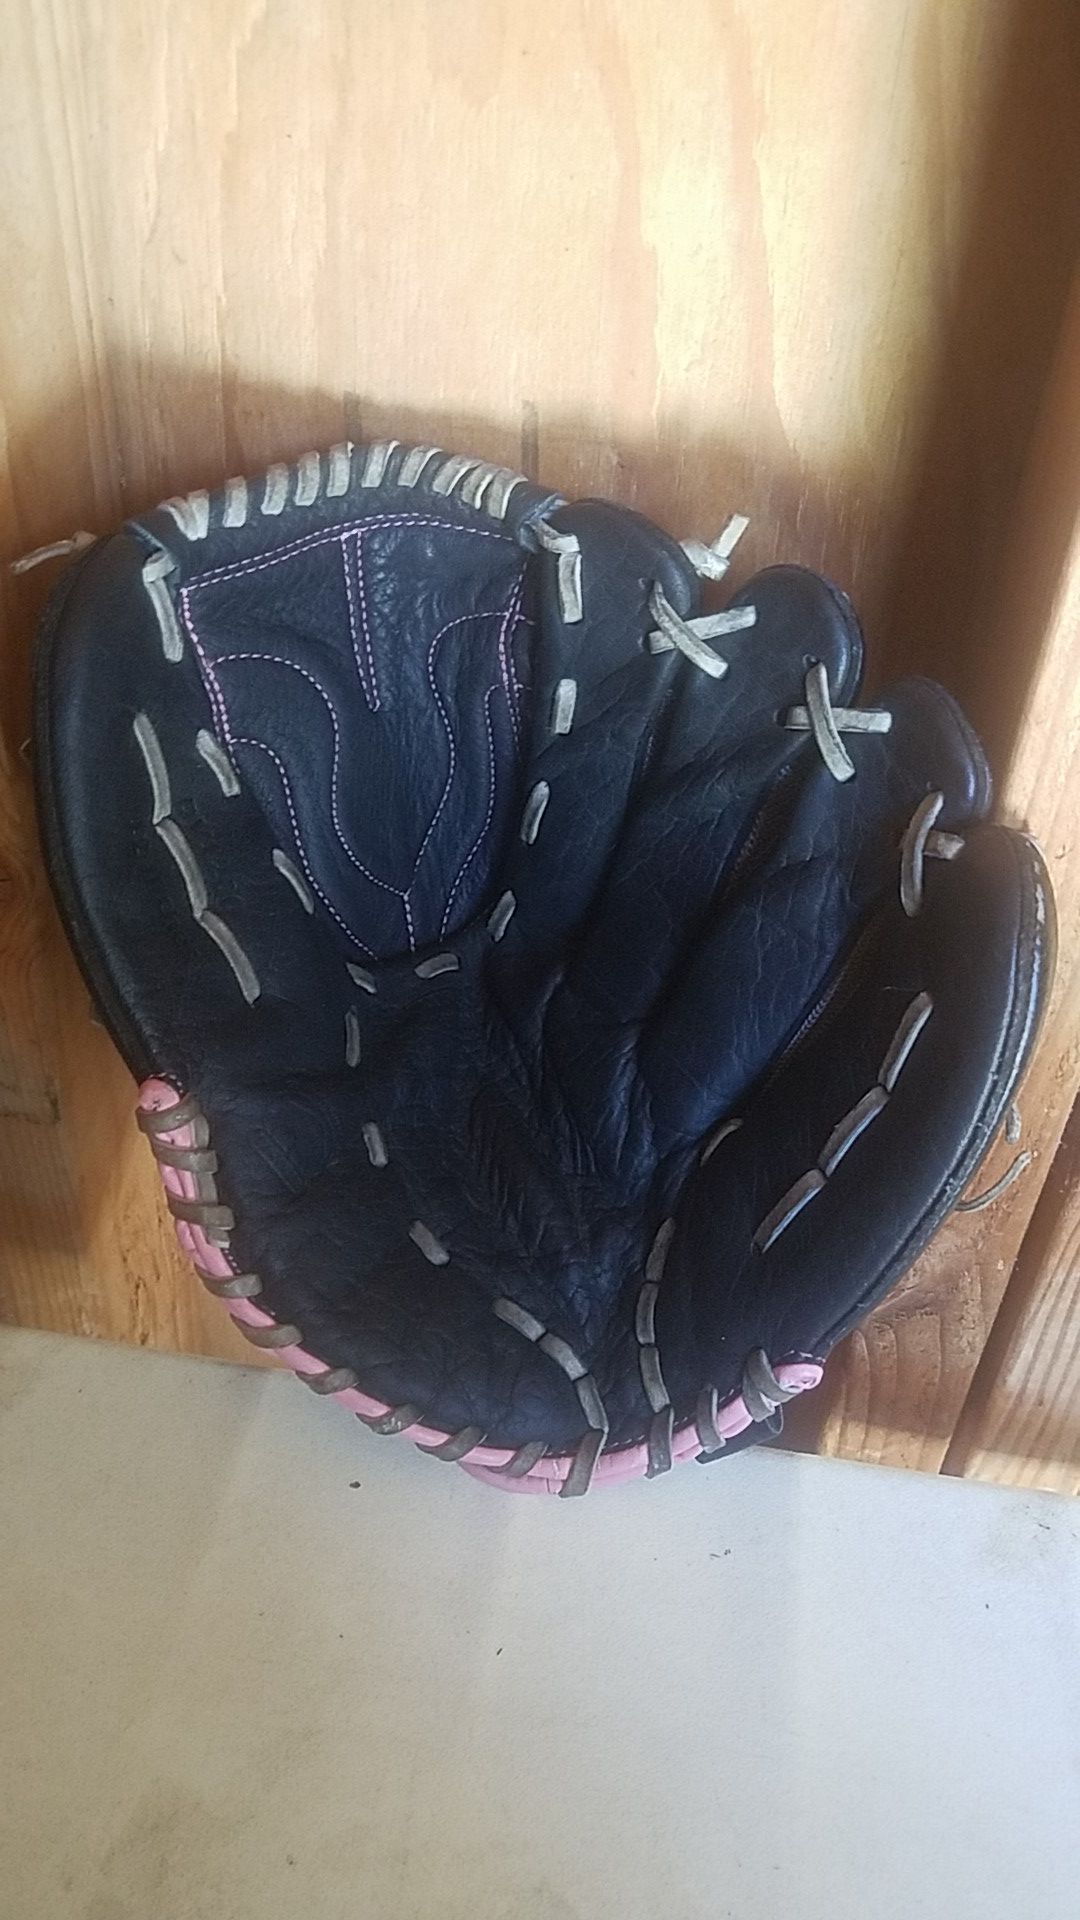 Fastpitch softball glove. 12"